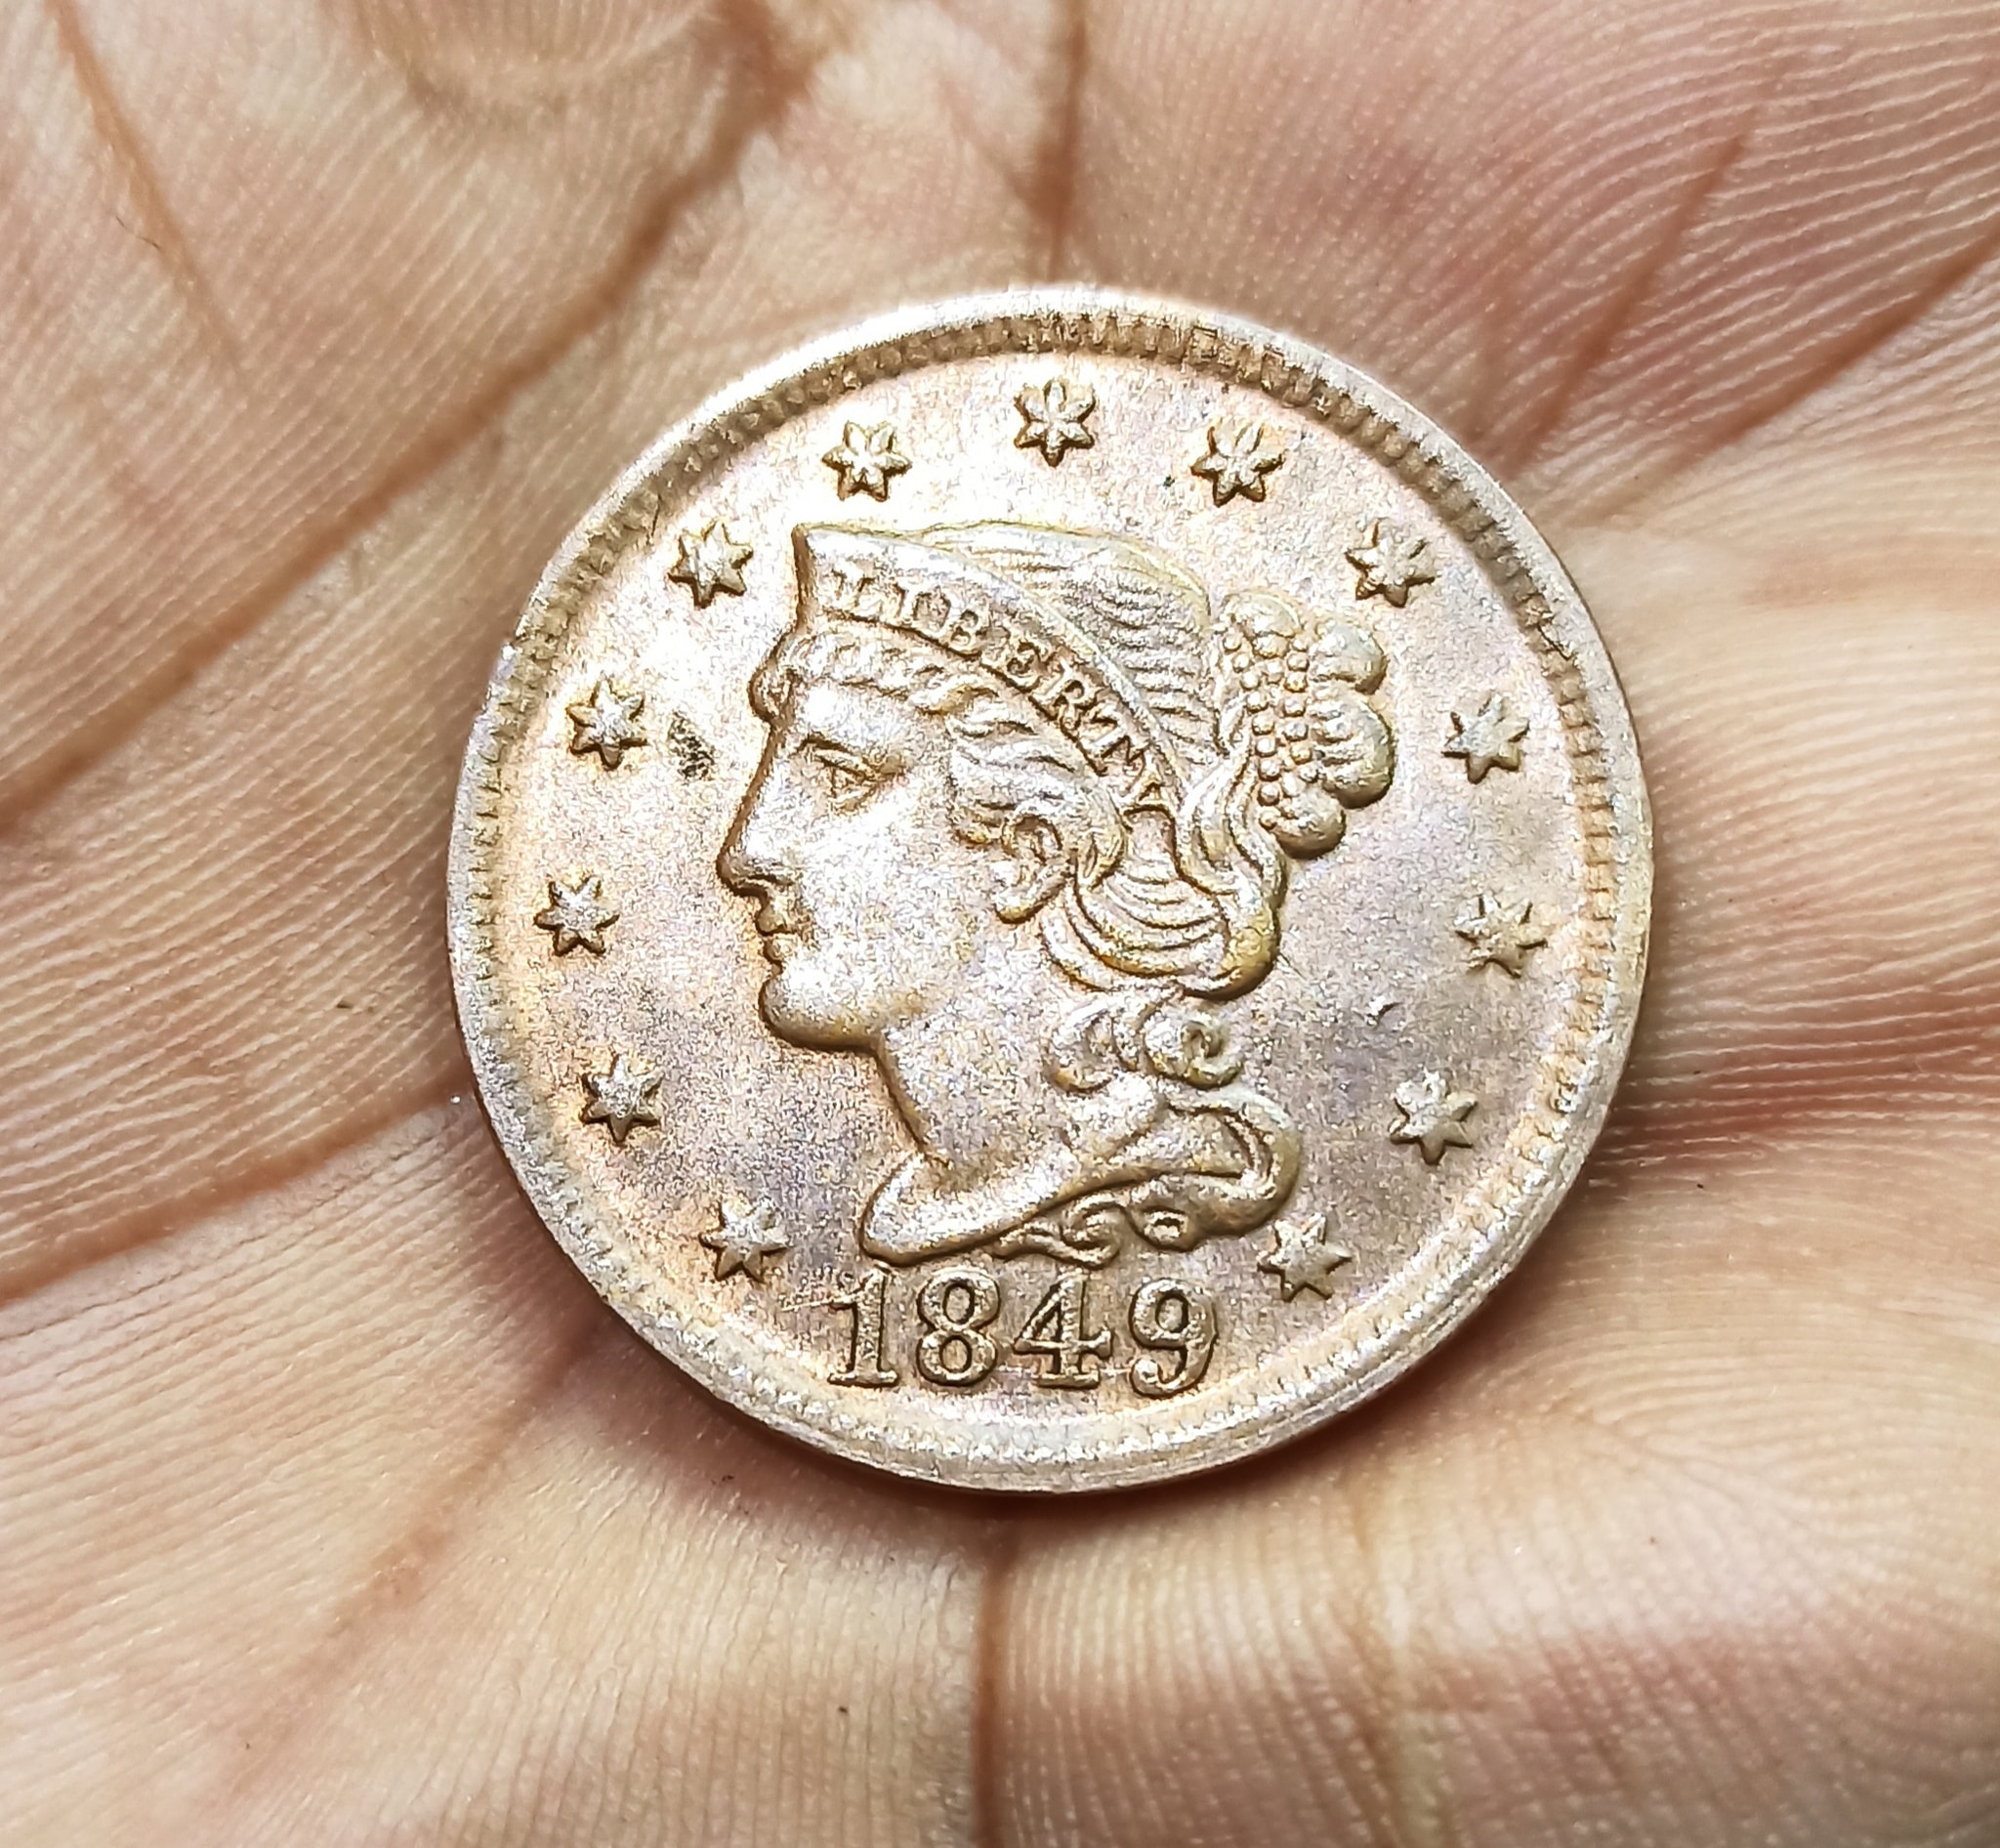 Liberty 1849 Coin